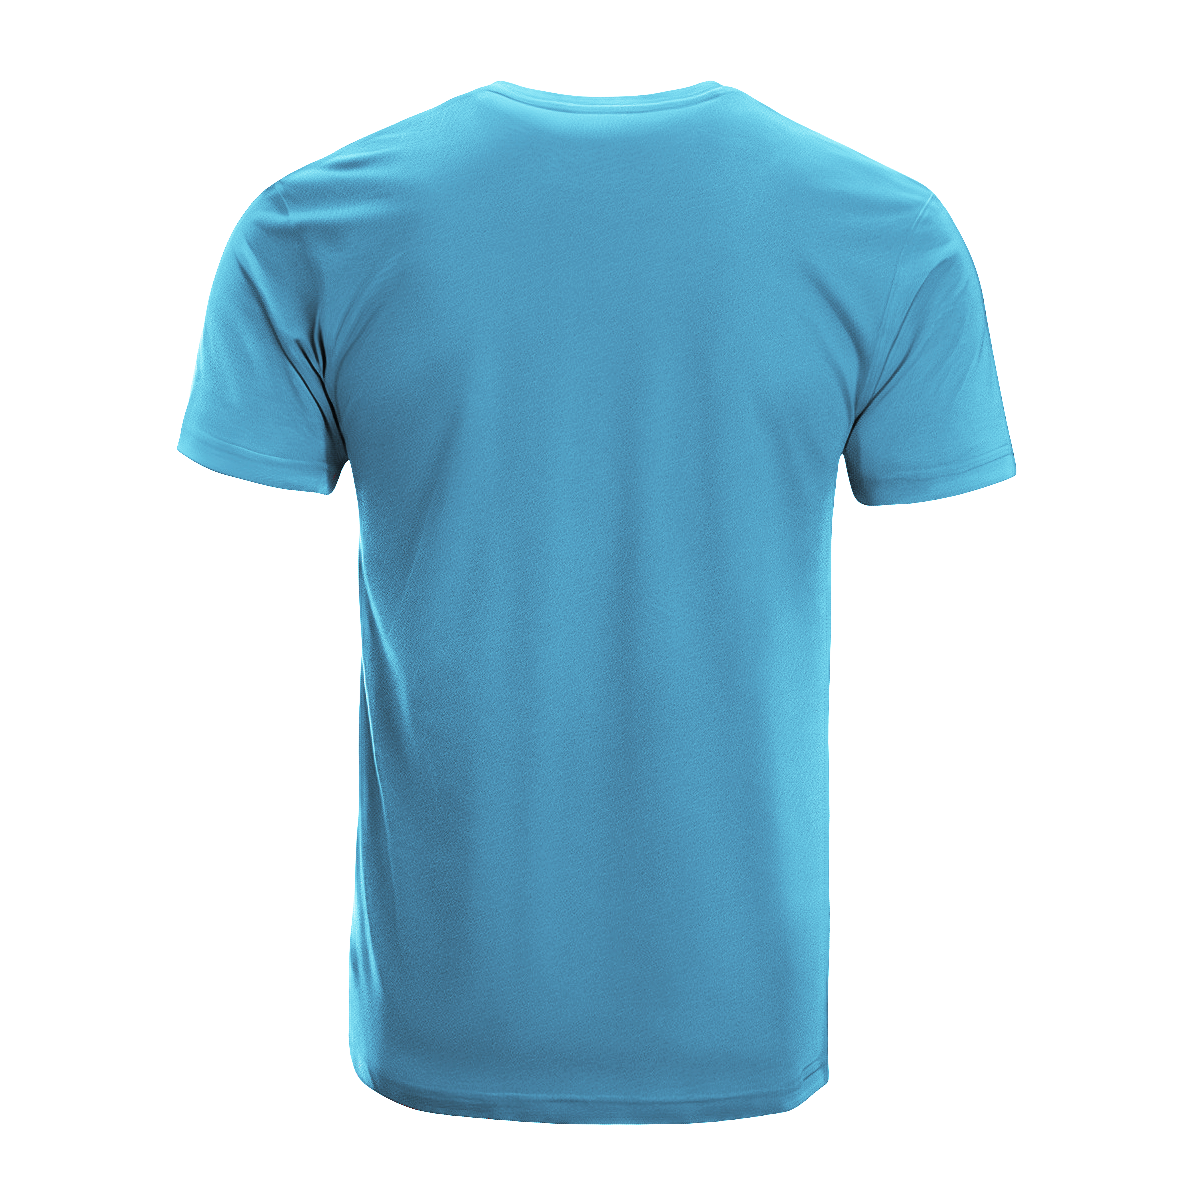 Swinton Tartan Crest T-shirt - I'm not yelling style